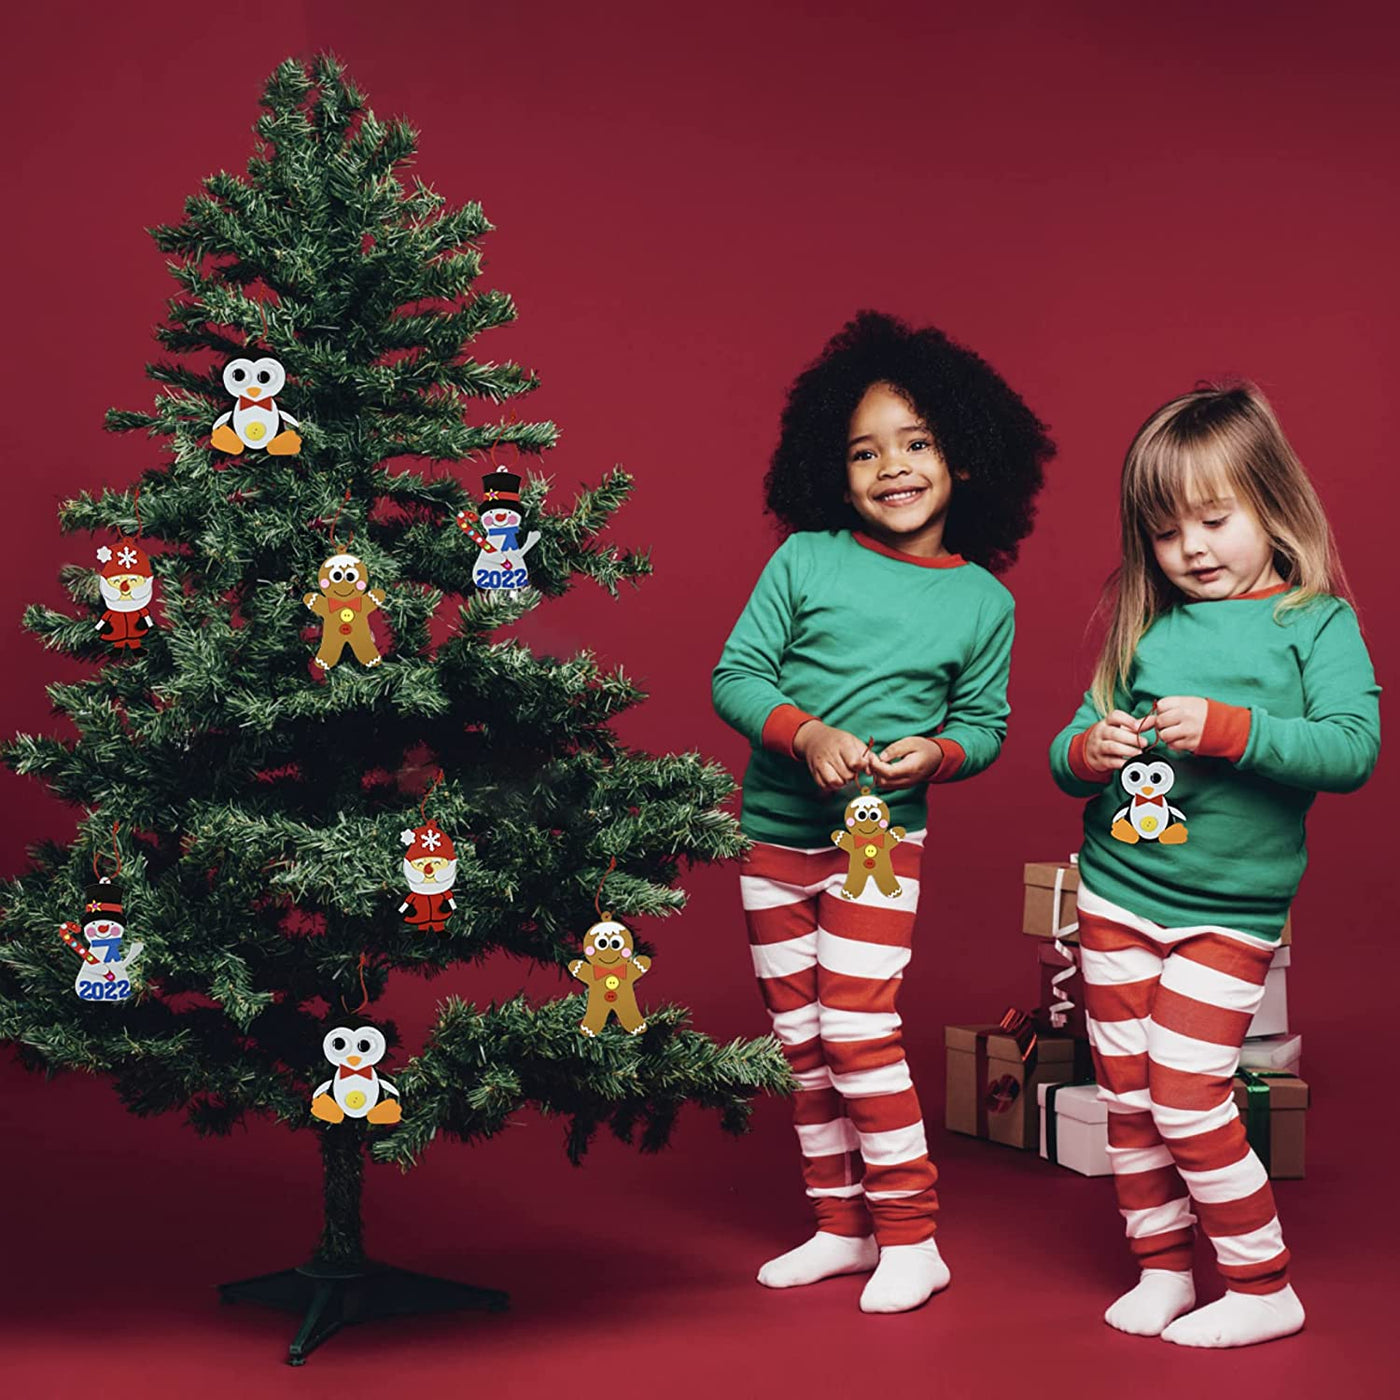 4E's Novelty Foam Christmas Character Ornament Crafts for Kids (12 Pack) Santa, Gingerbread Man, Snowman, & Penguin Christmas Crafts for Kids Toddlers 4-8, 3-12 DIY Ornament Craft Kit Bulk